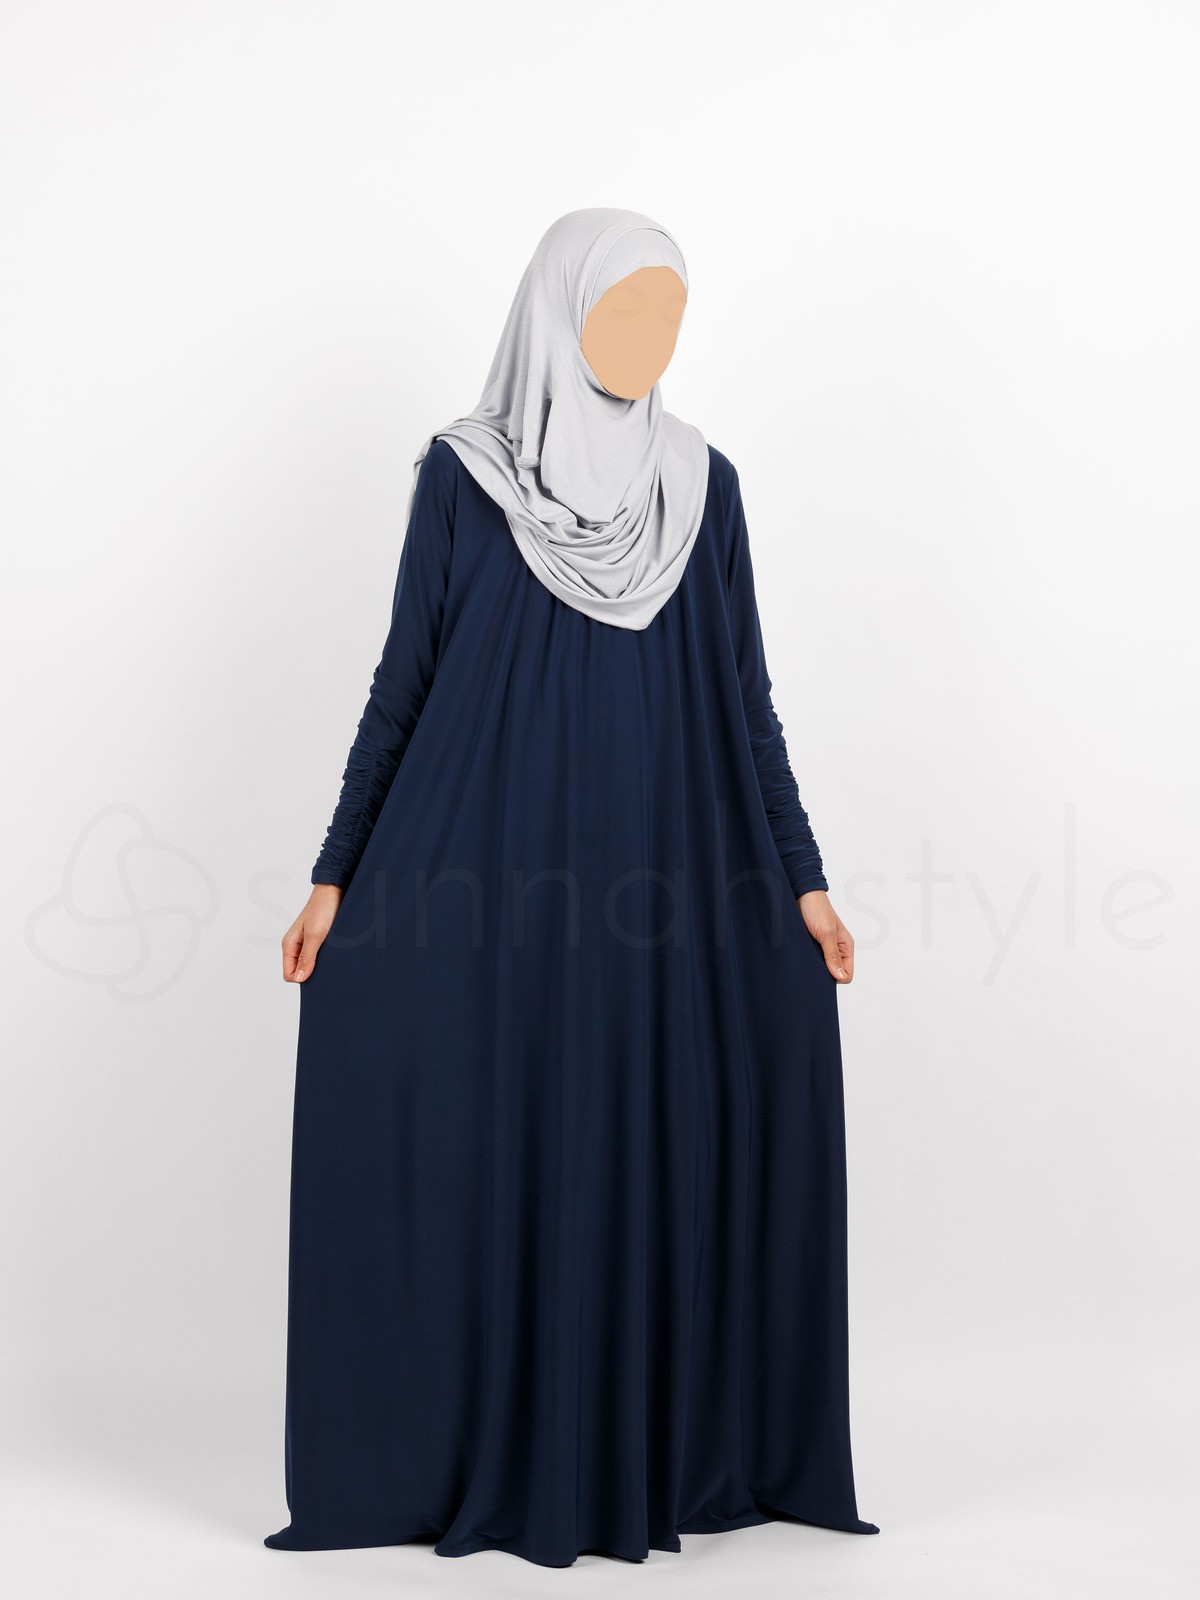 Sunnah Style - Girls Flourish Jersey Abaya (Navy Blue)